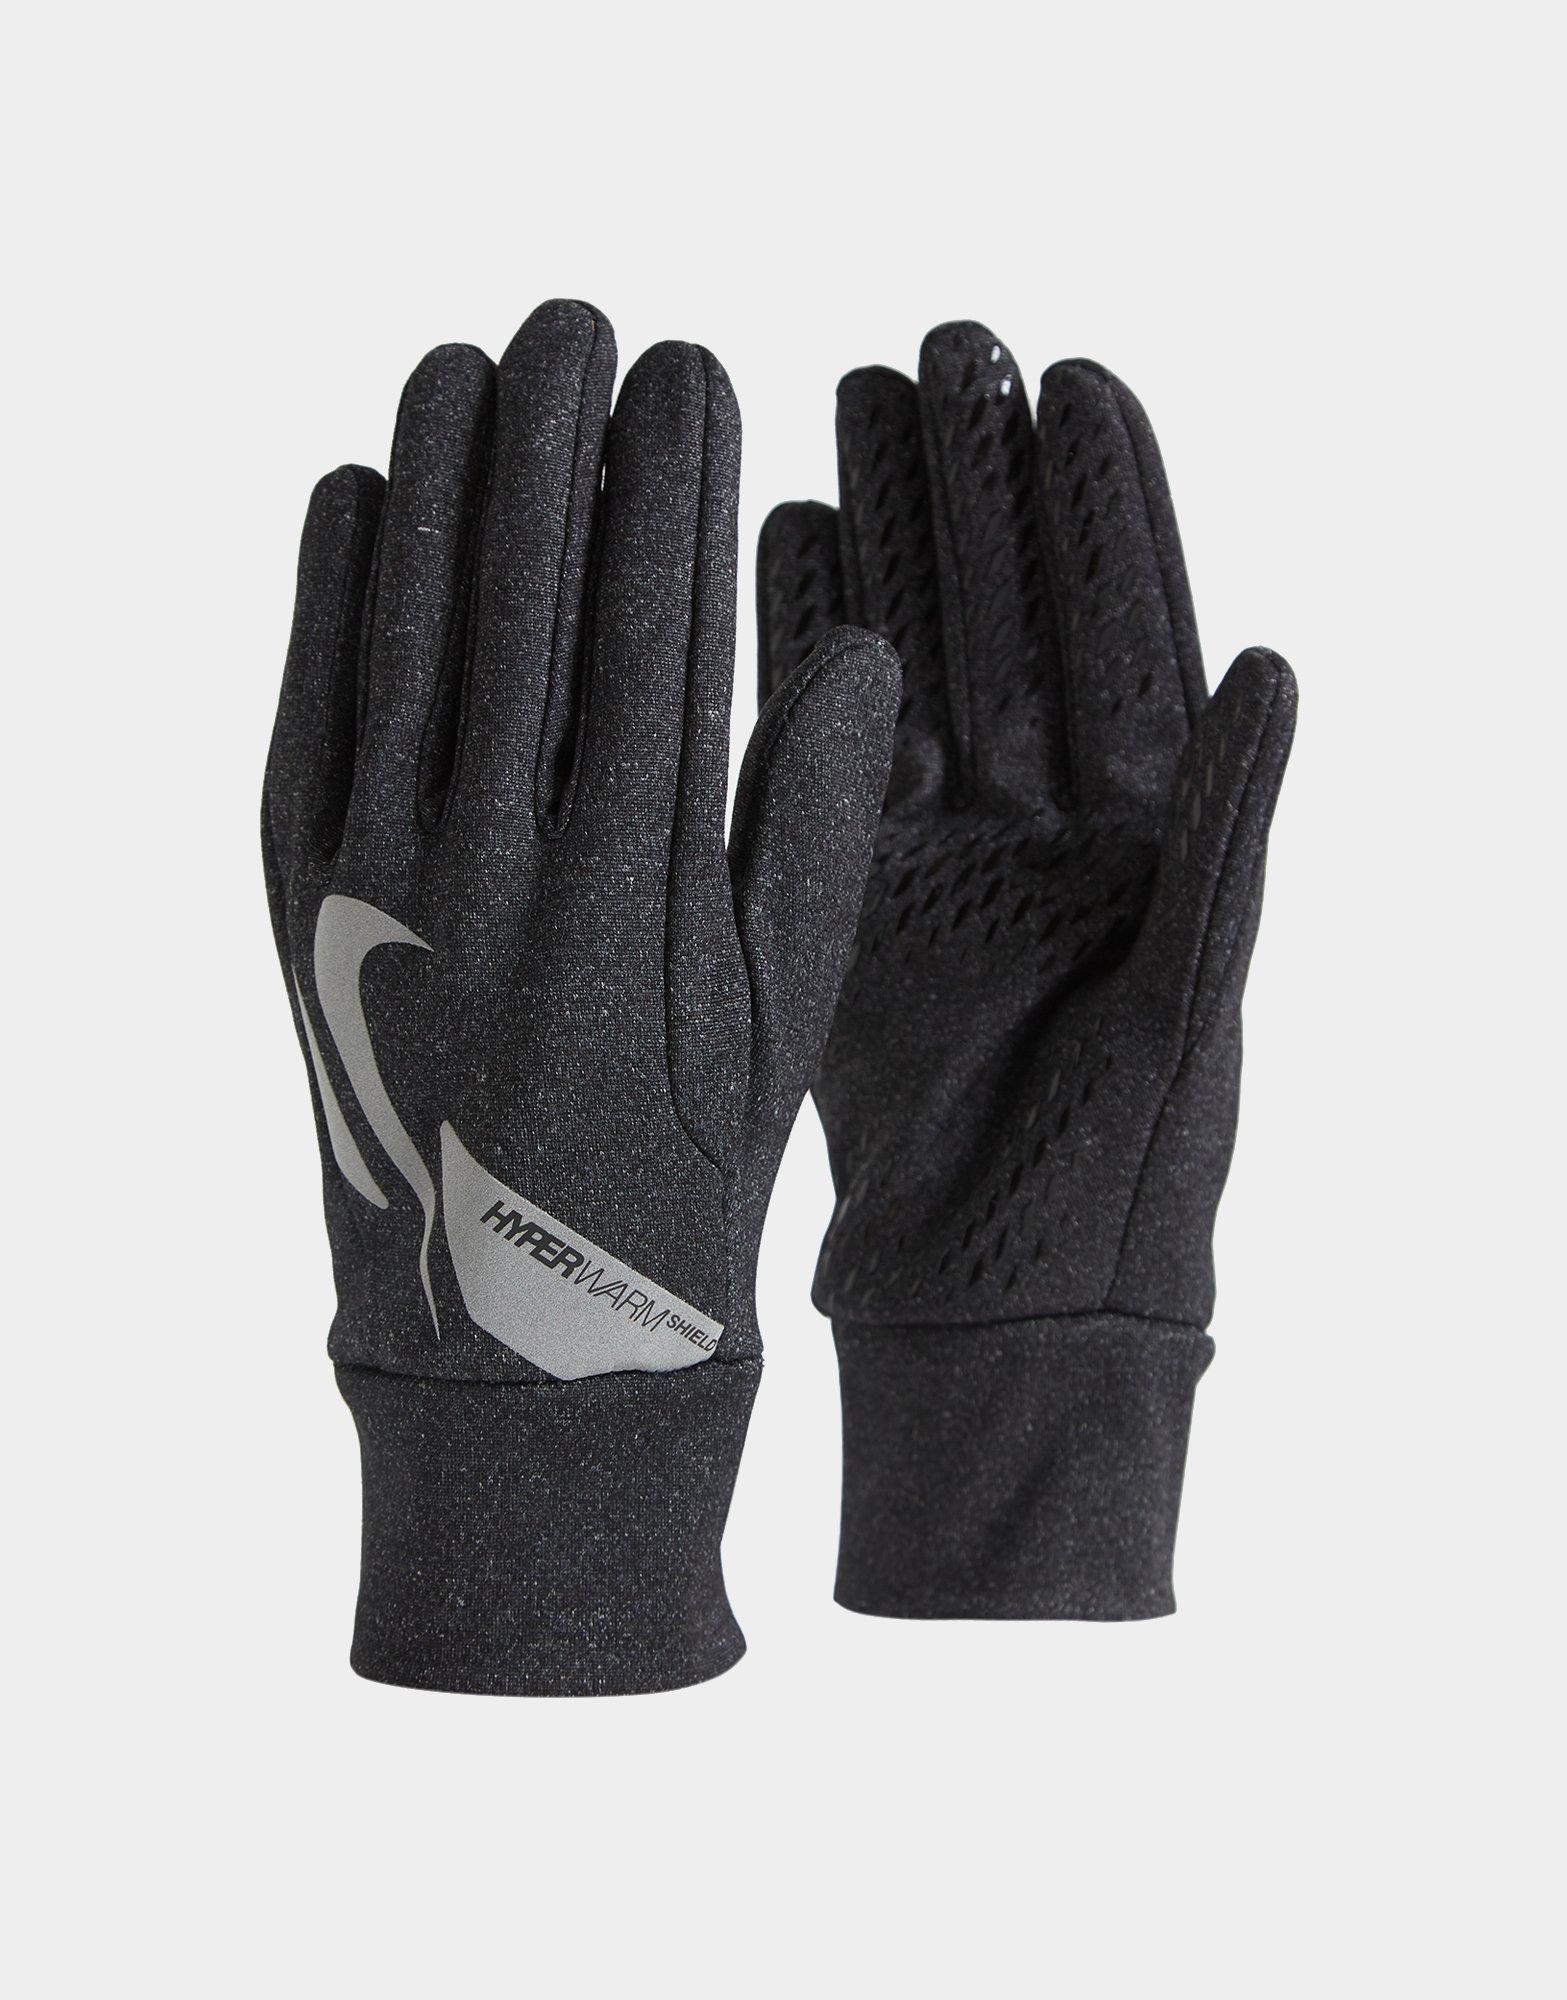 hyperwarm gloves nike